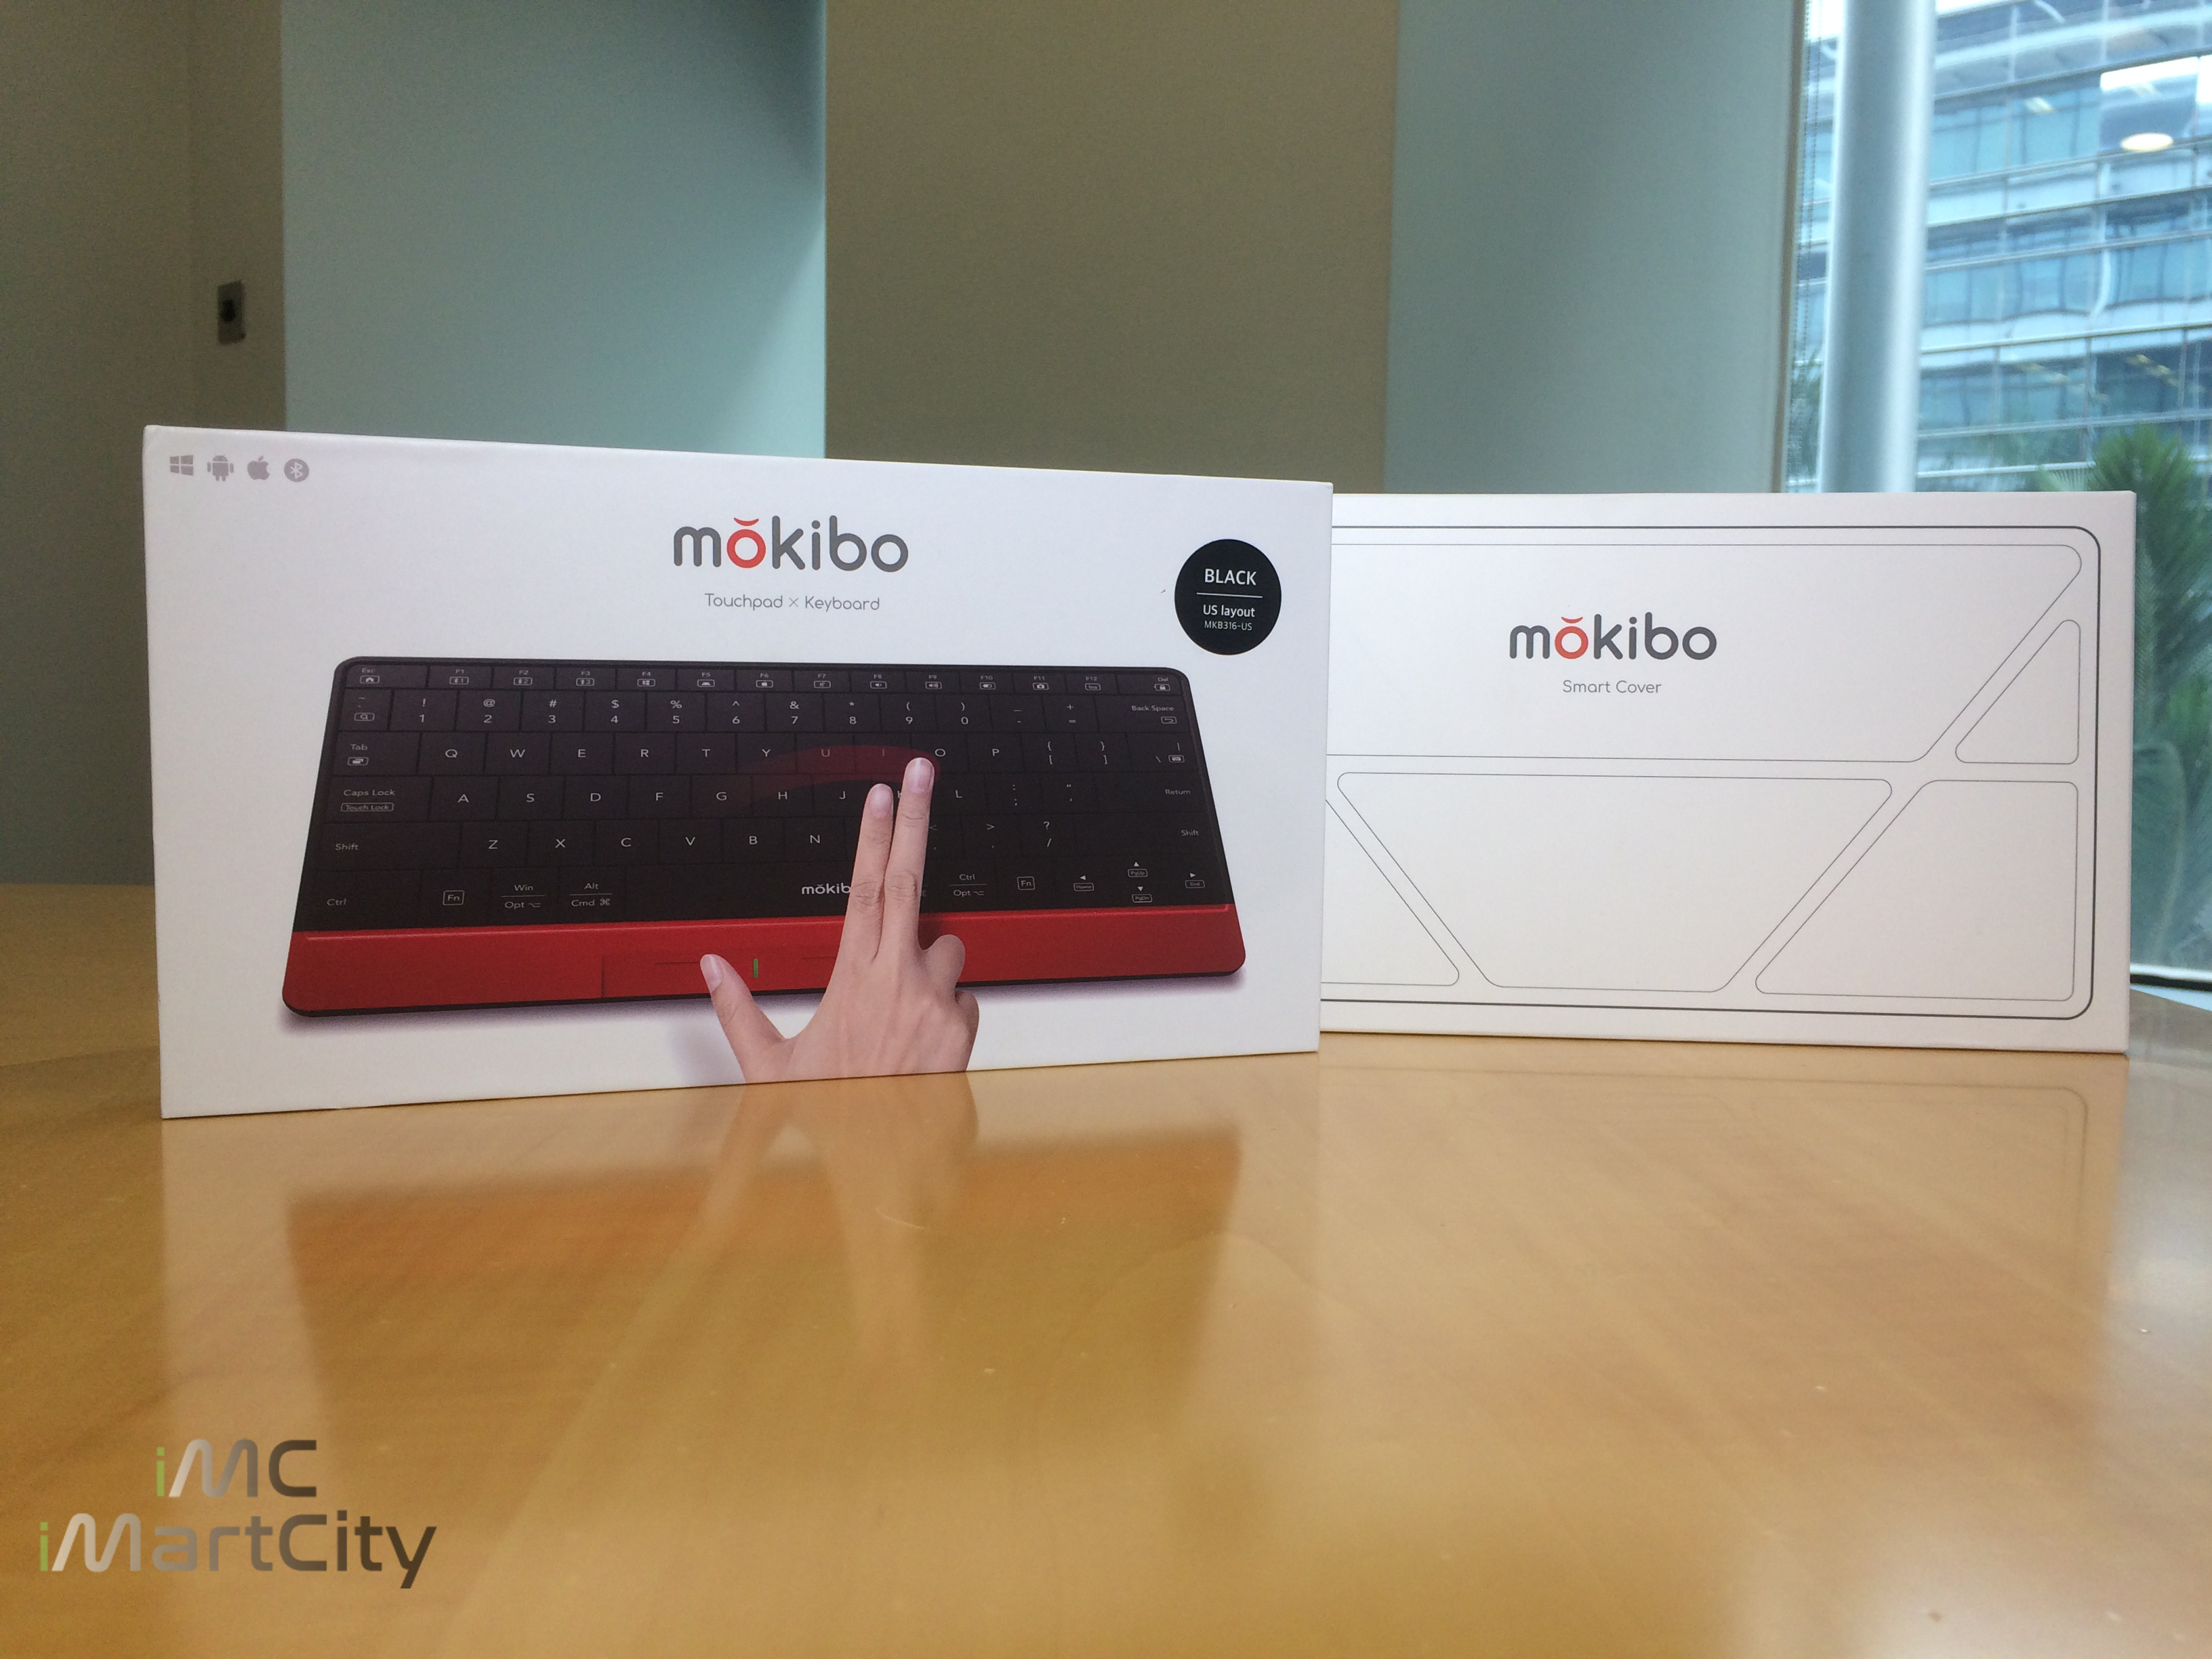 lexuma-mokibo-touchpad-keyboard-bluetooth-wireless-pantograph-laptop-black1